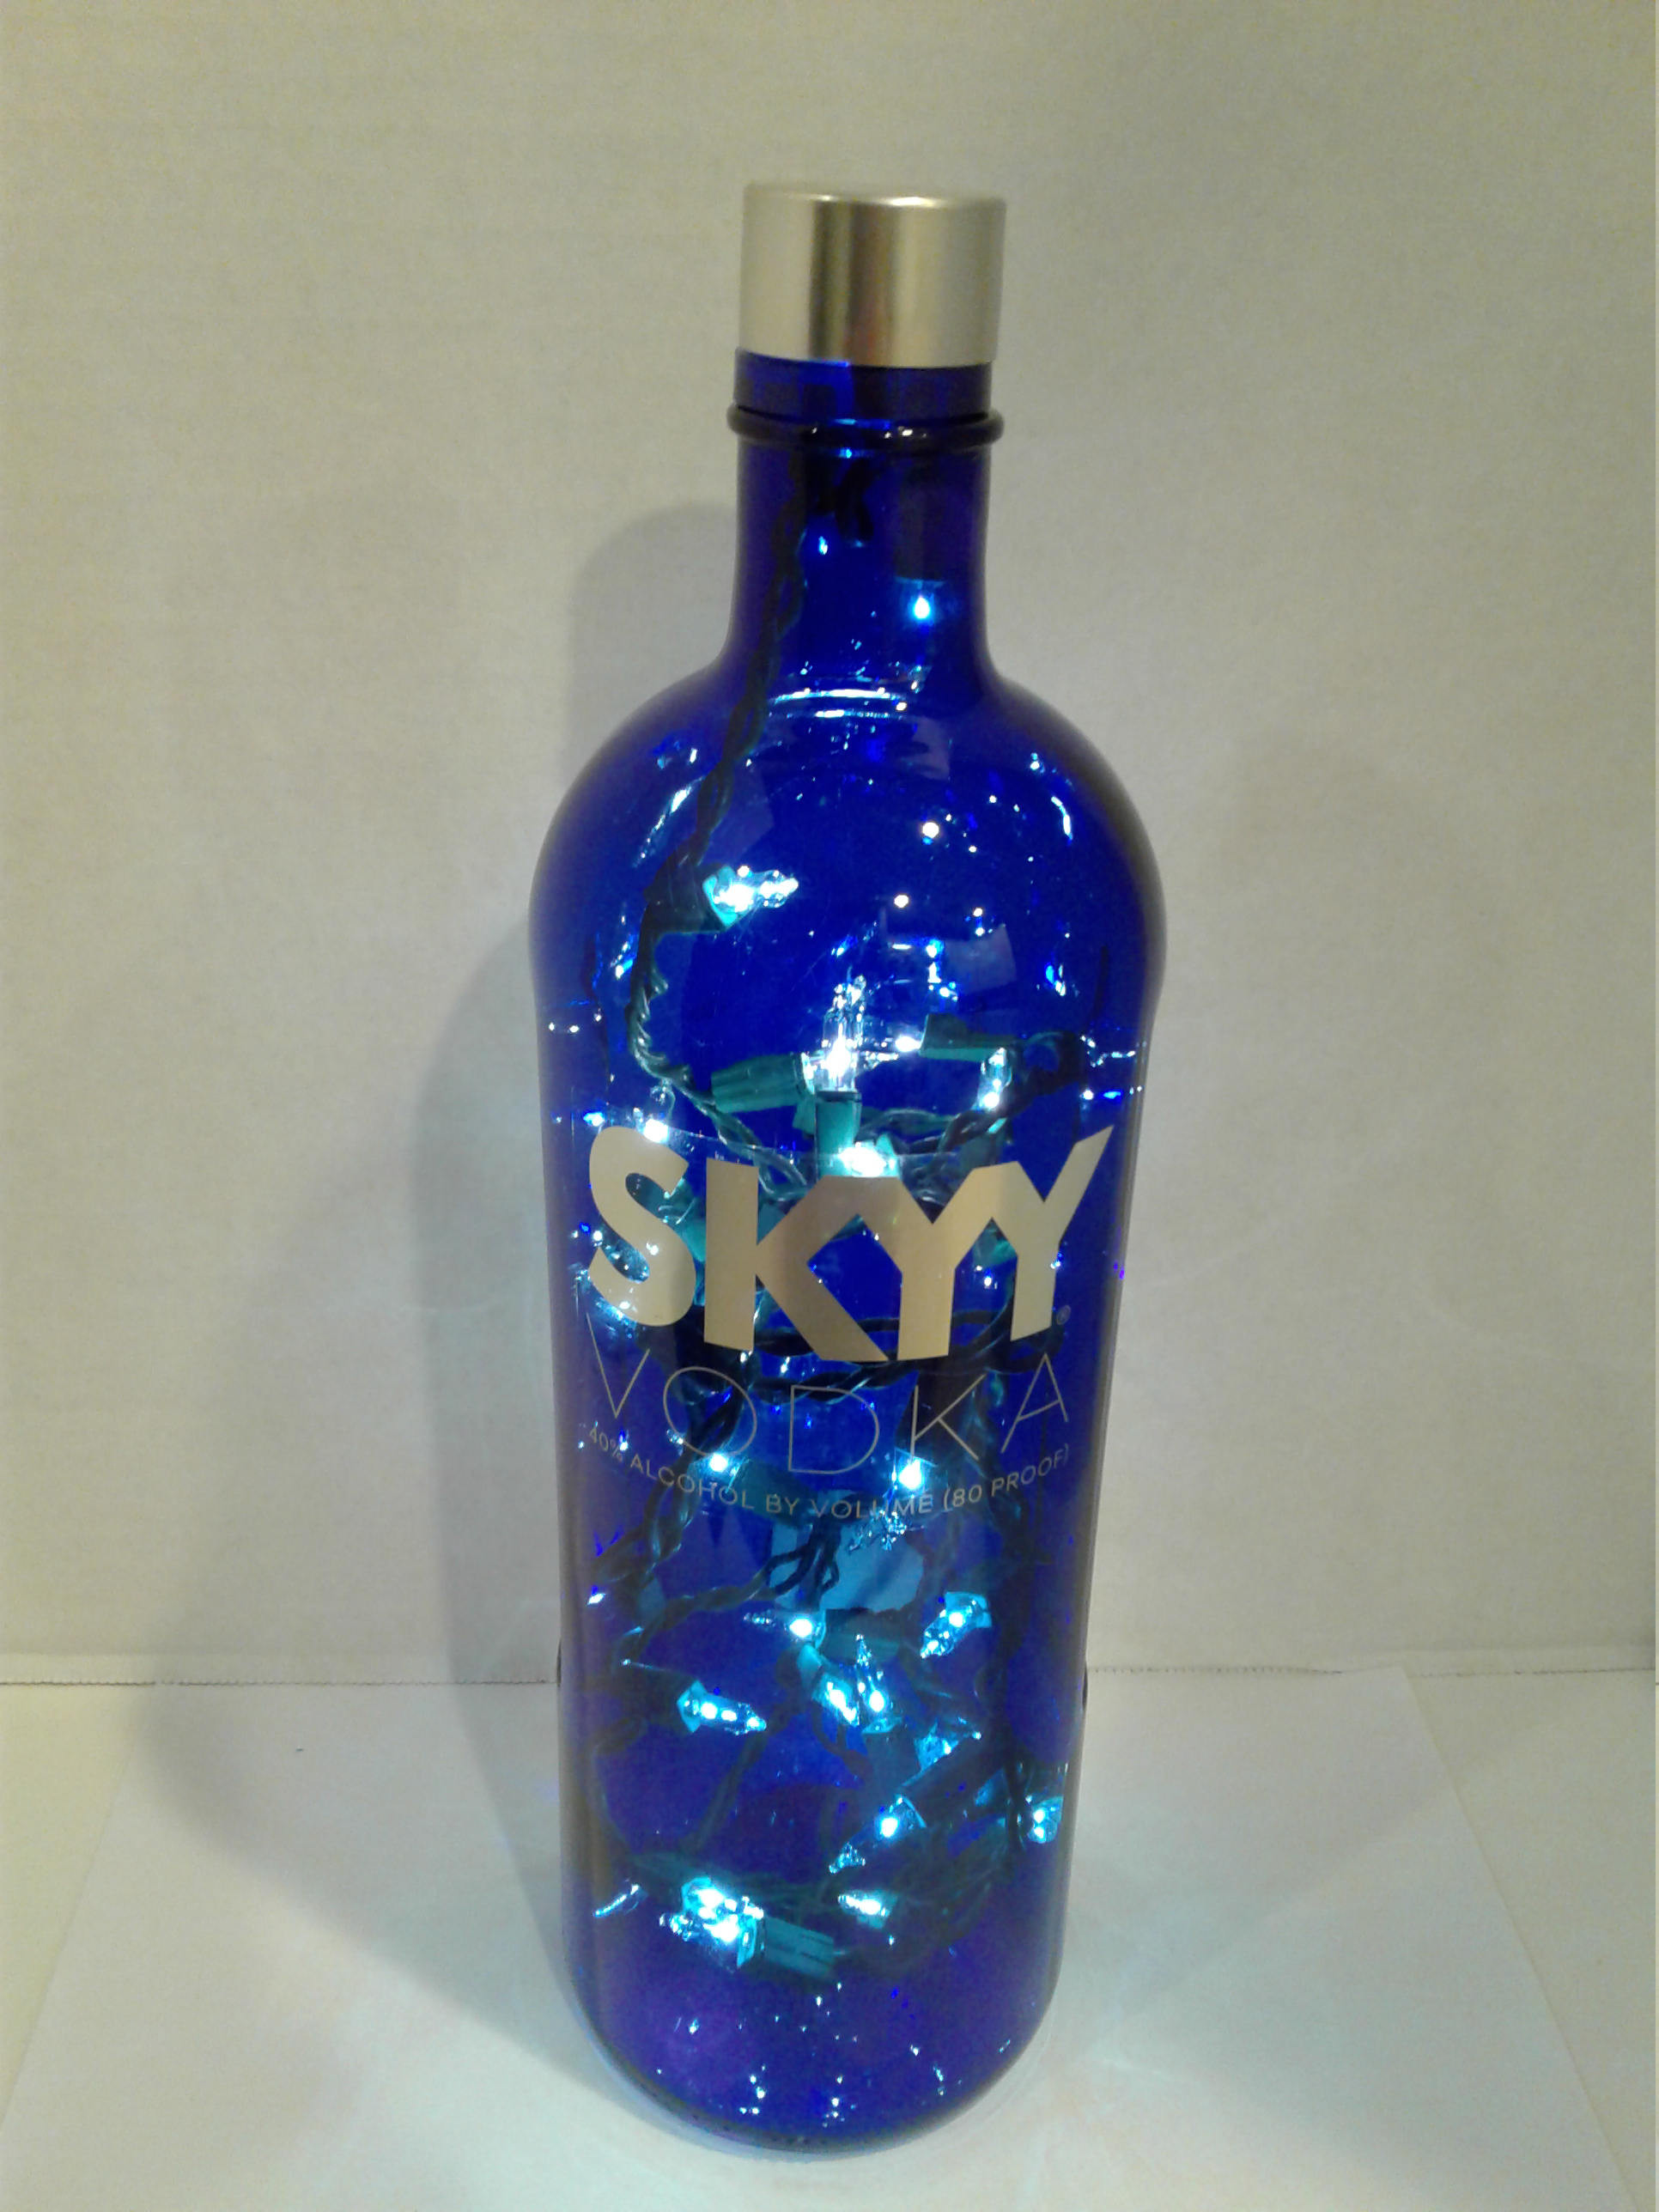 Cobalt Blue Glass Vases and Bottles Of Blue Upcycled Skyy Vodka Wine Bottle Luminary Magnum Etsy In Dzoom